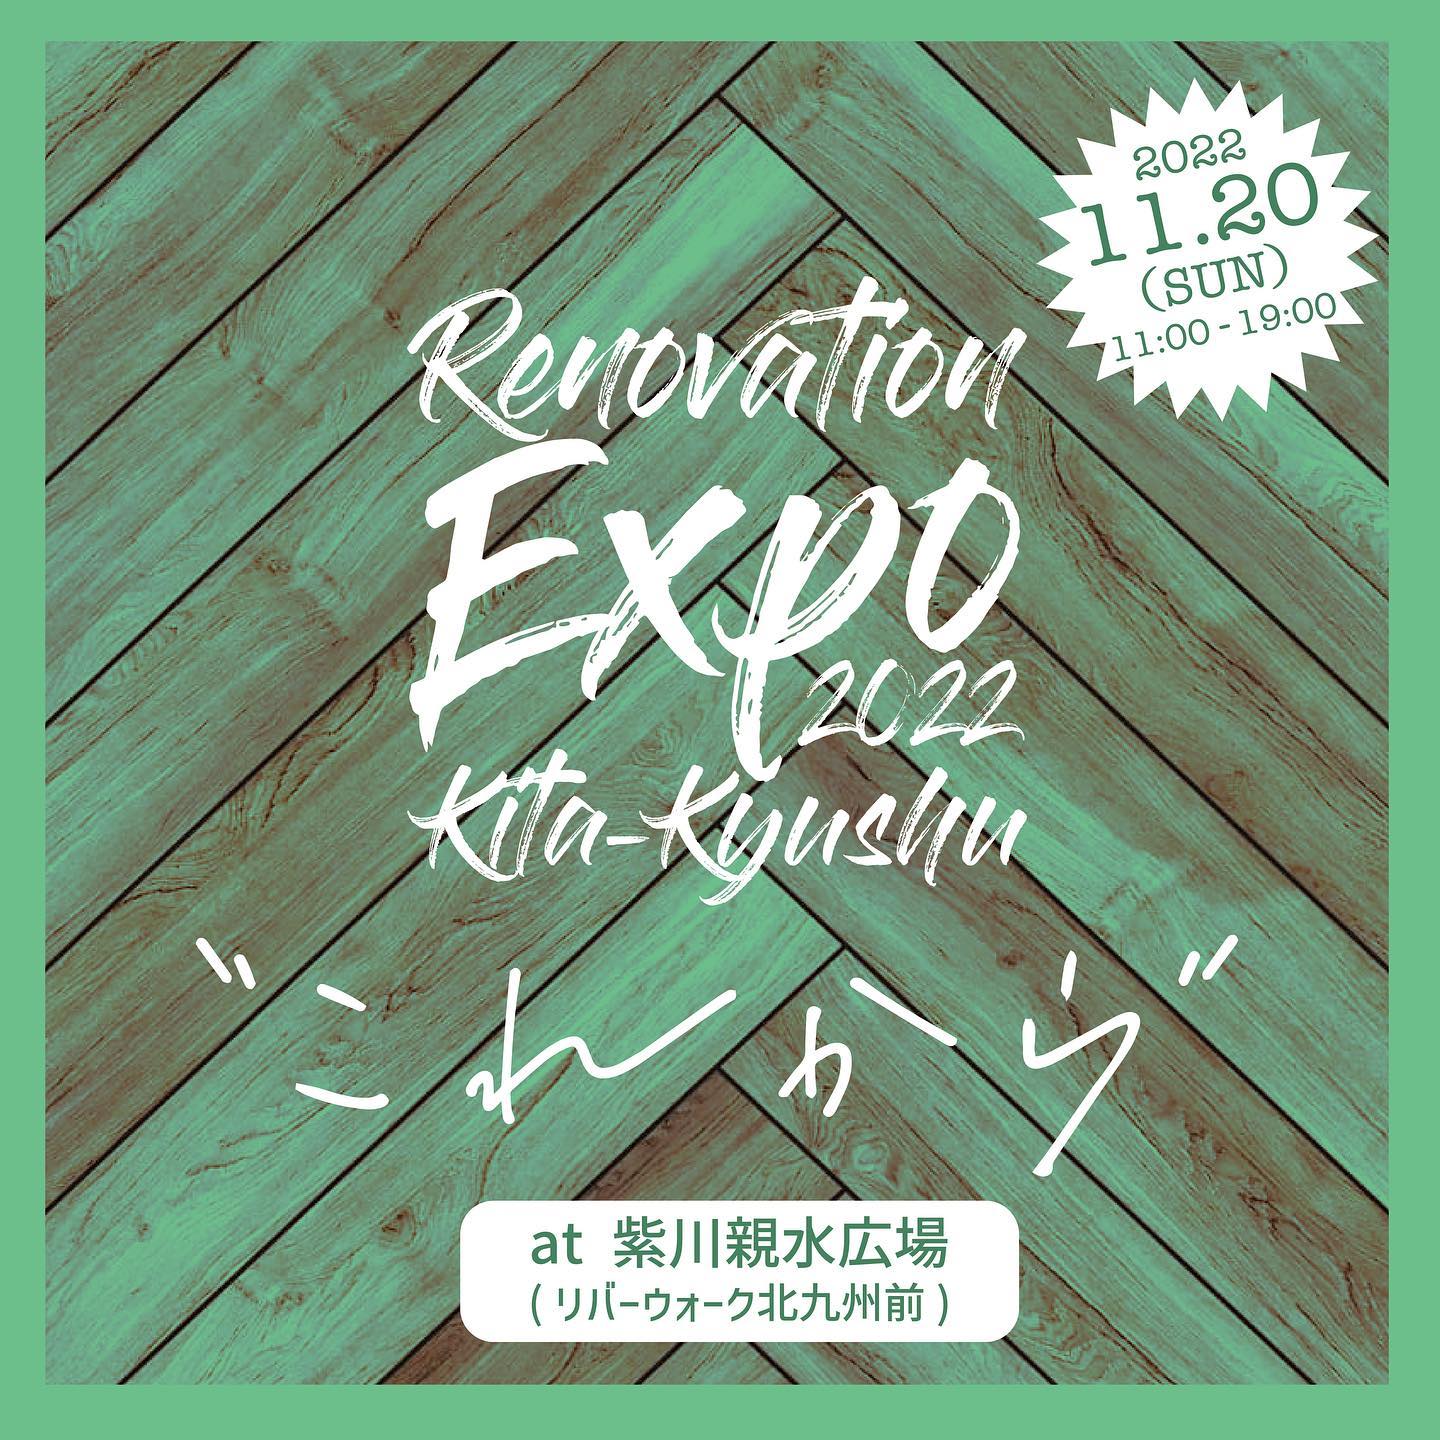 RENOVATION EXPO 2022 in Kita-Kyushu “これから“　